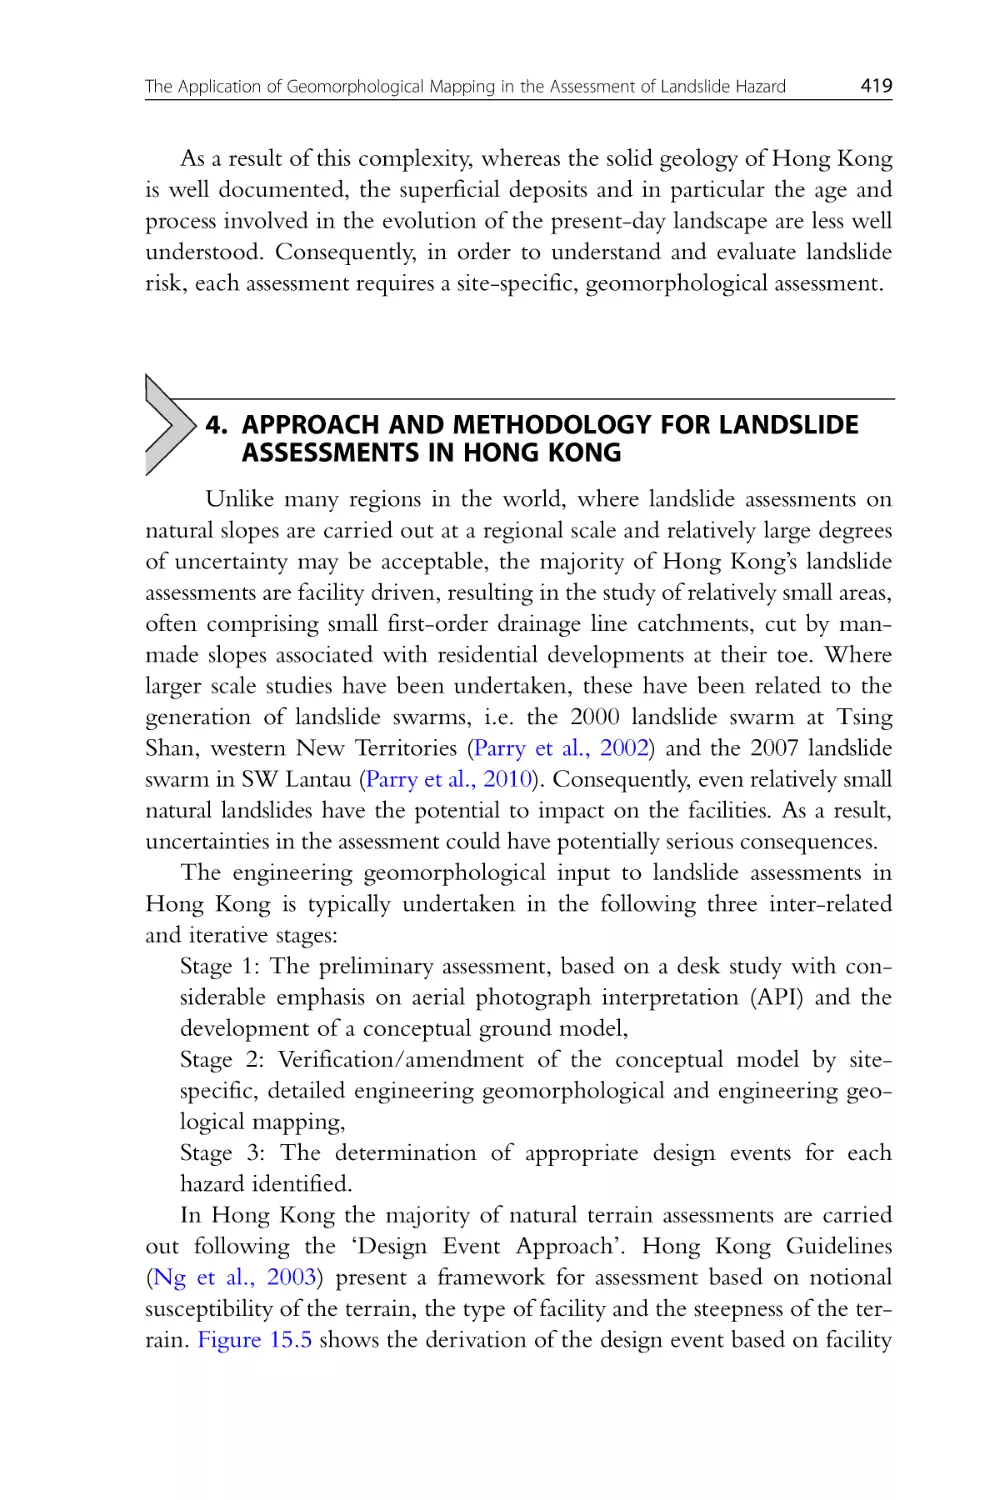 4. Approach and Methodology for Landslide Assessments in Hong Kong